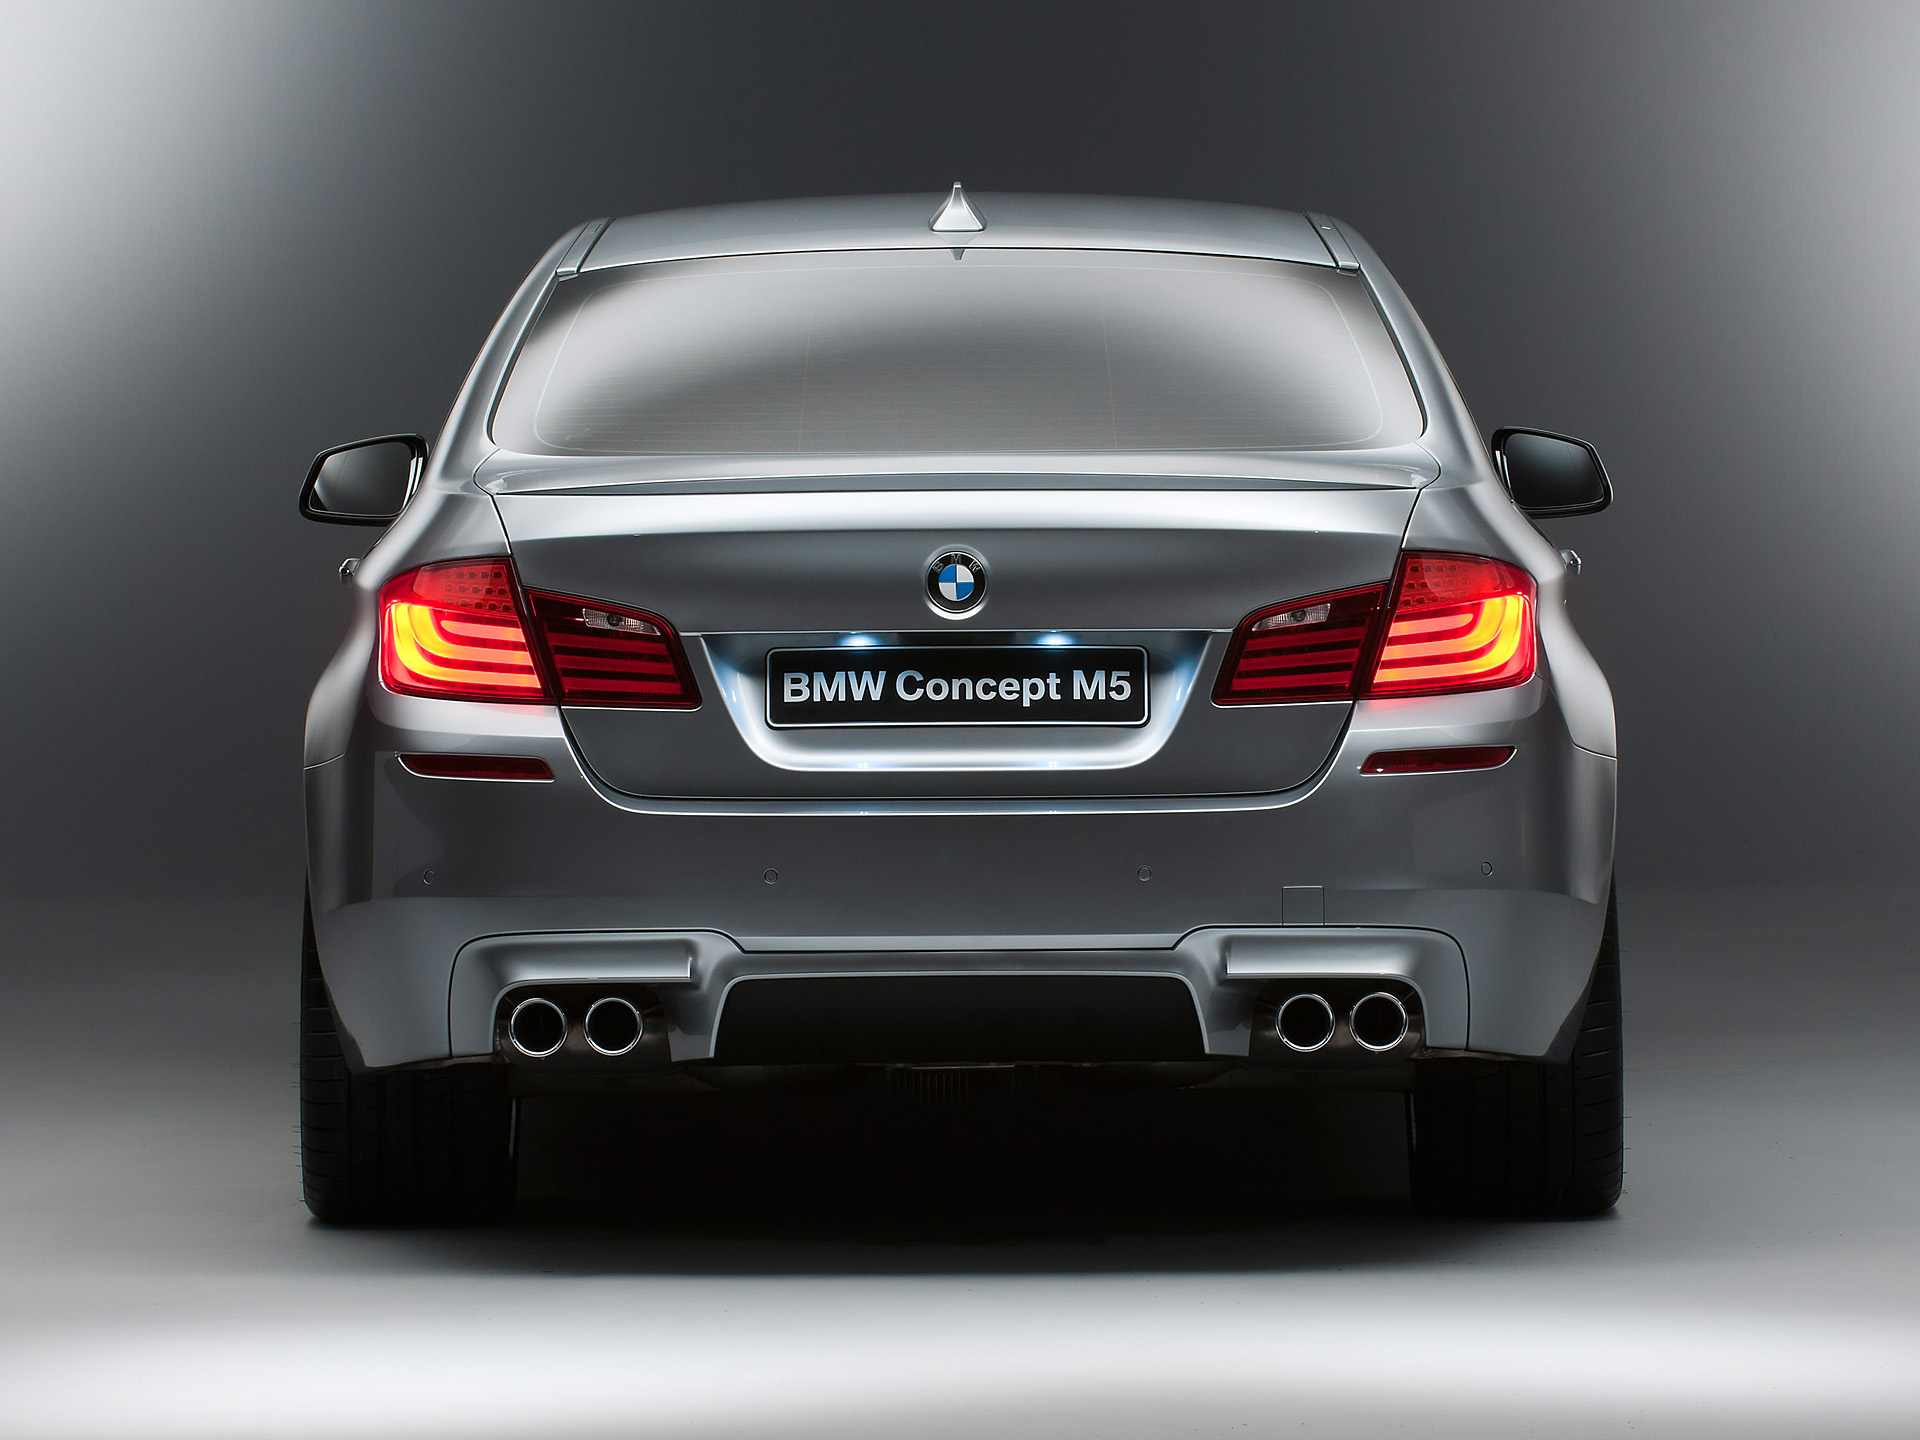  2011 BMW M5 Concept Wallpaper.